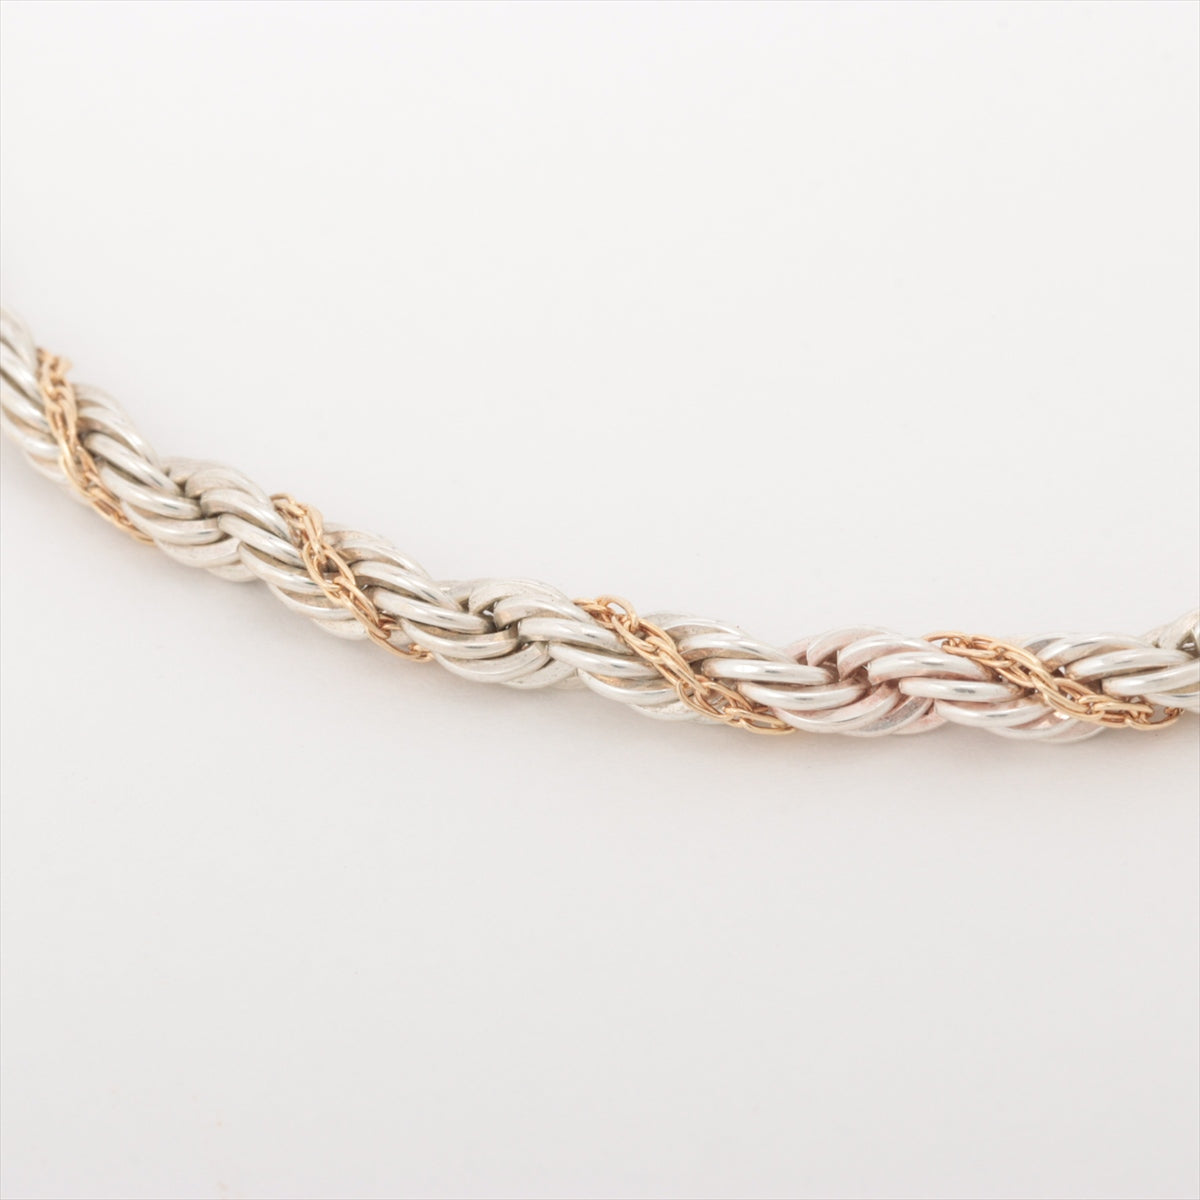 Tiffany Twist Bracelet 925×750 5.8g Gold × Silver